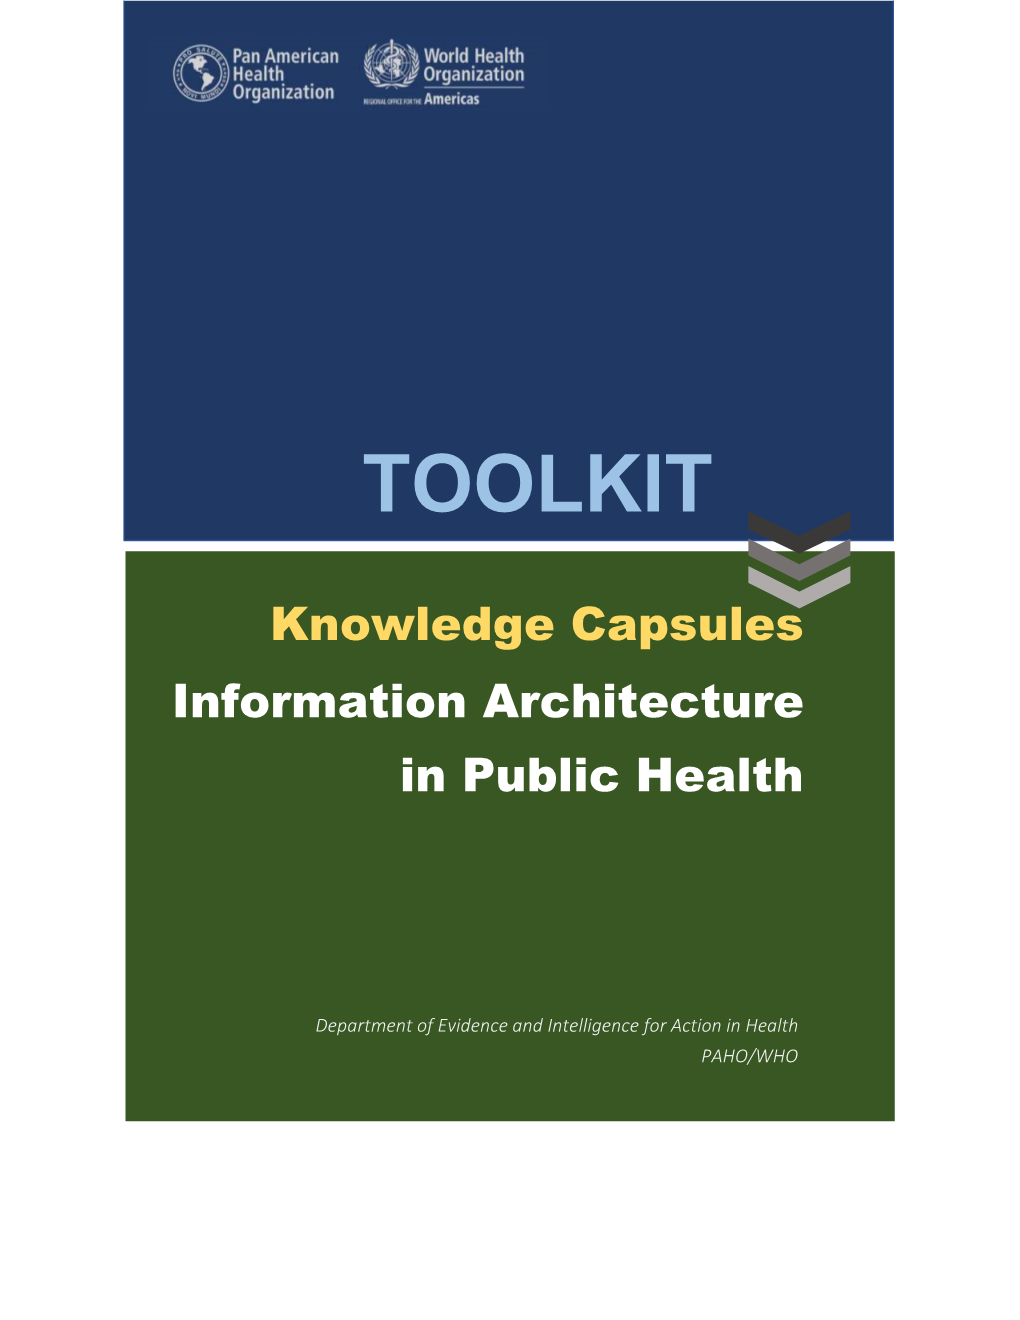 Information Architecture in Public Health